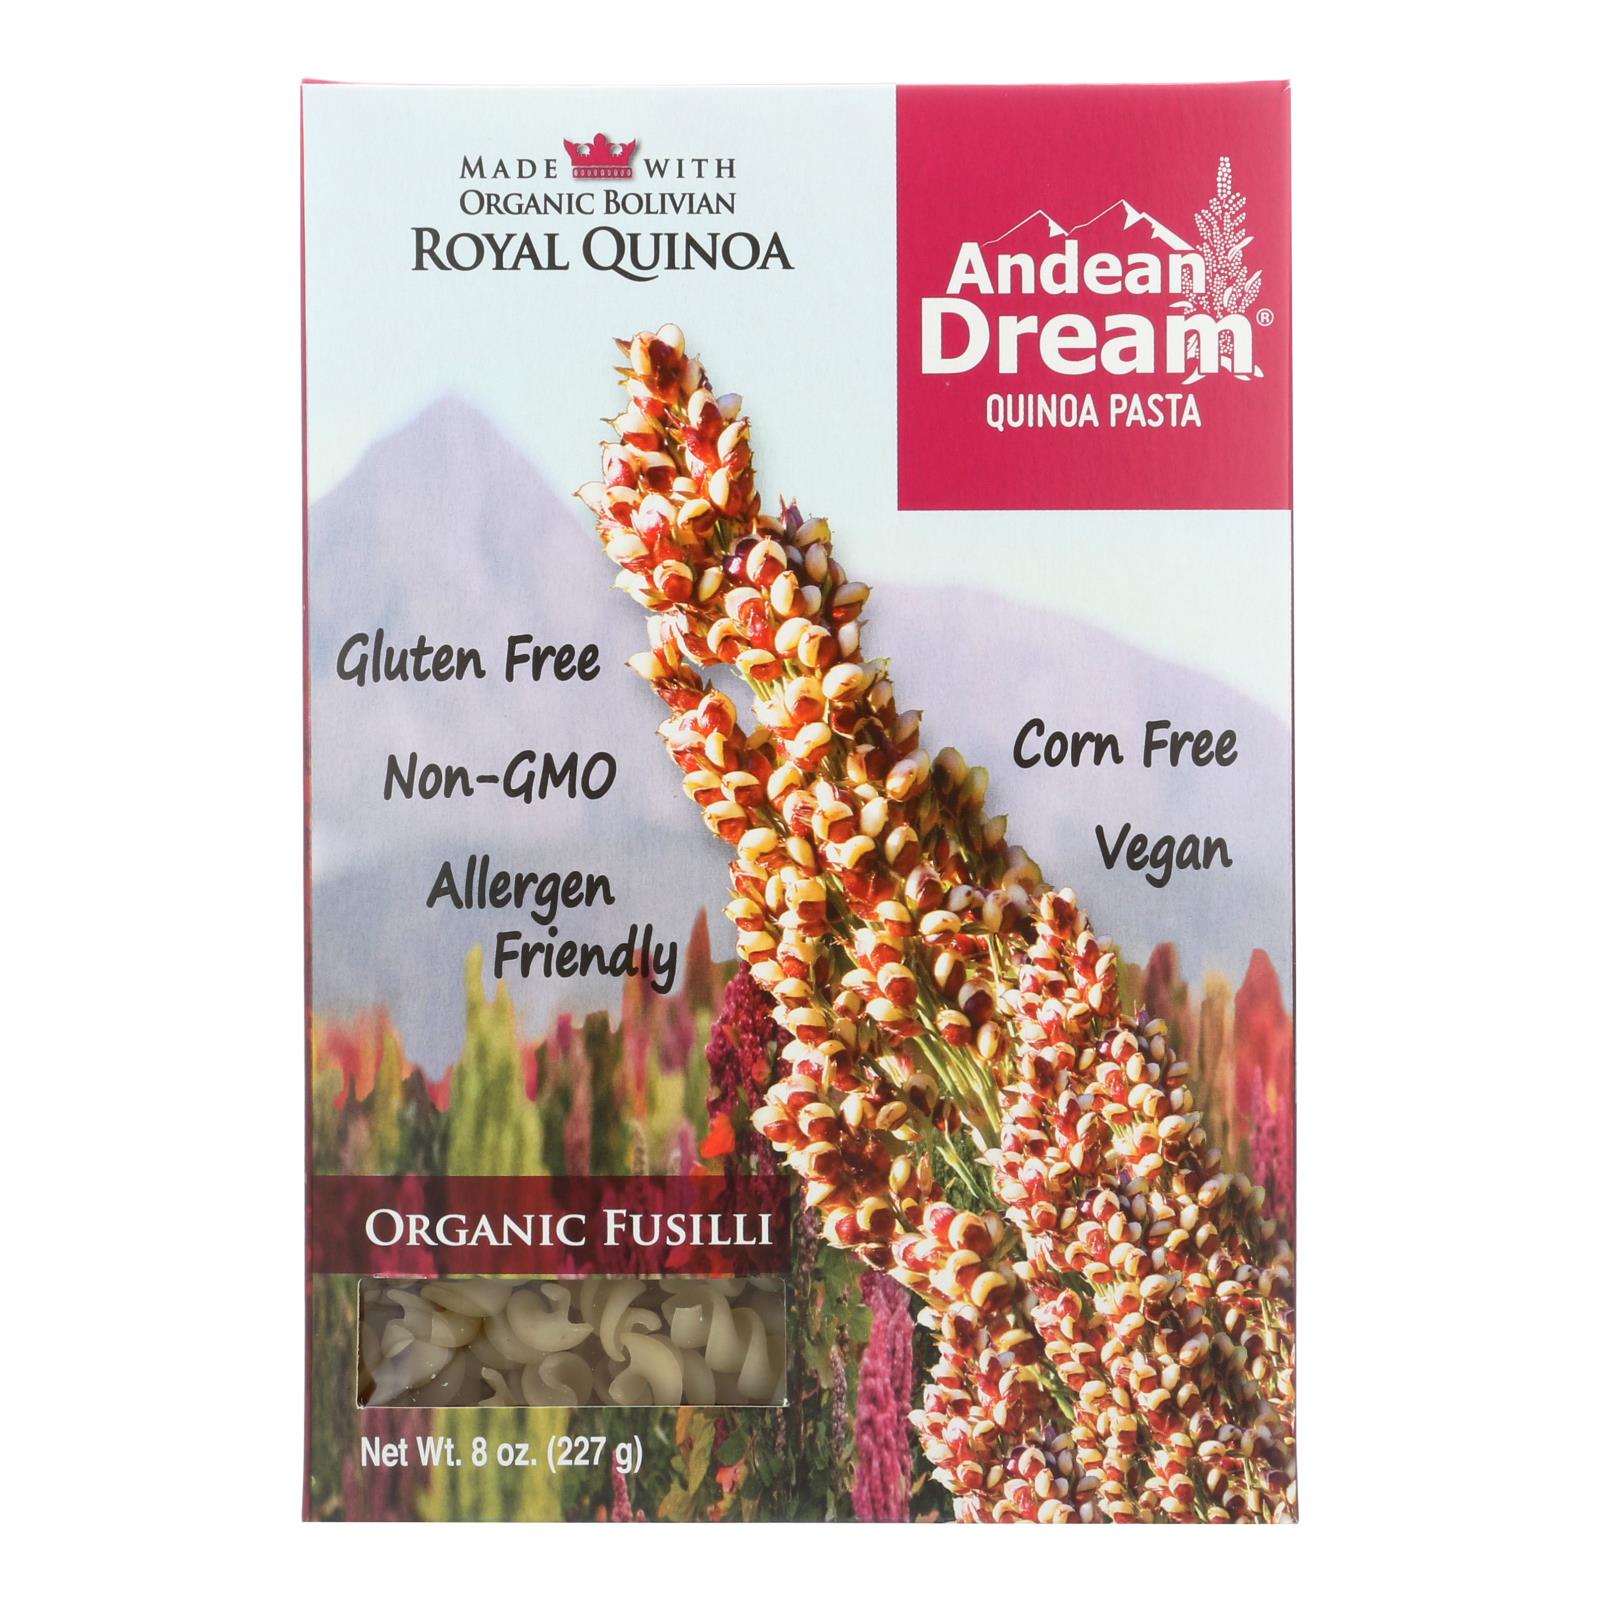 Andean Dream, Andean Dream Gluten Free Organic Fusilli Quinoa Pasta - Case of 12 - 8 oz. (Pack of 12)